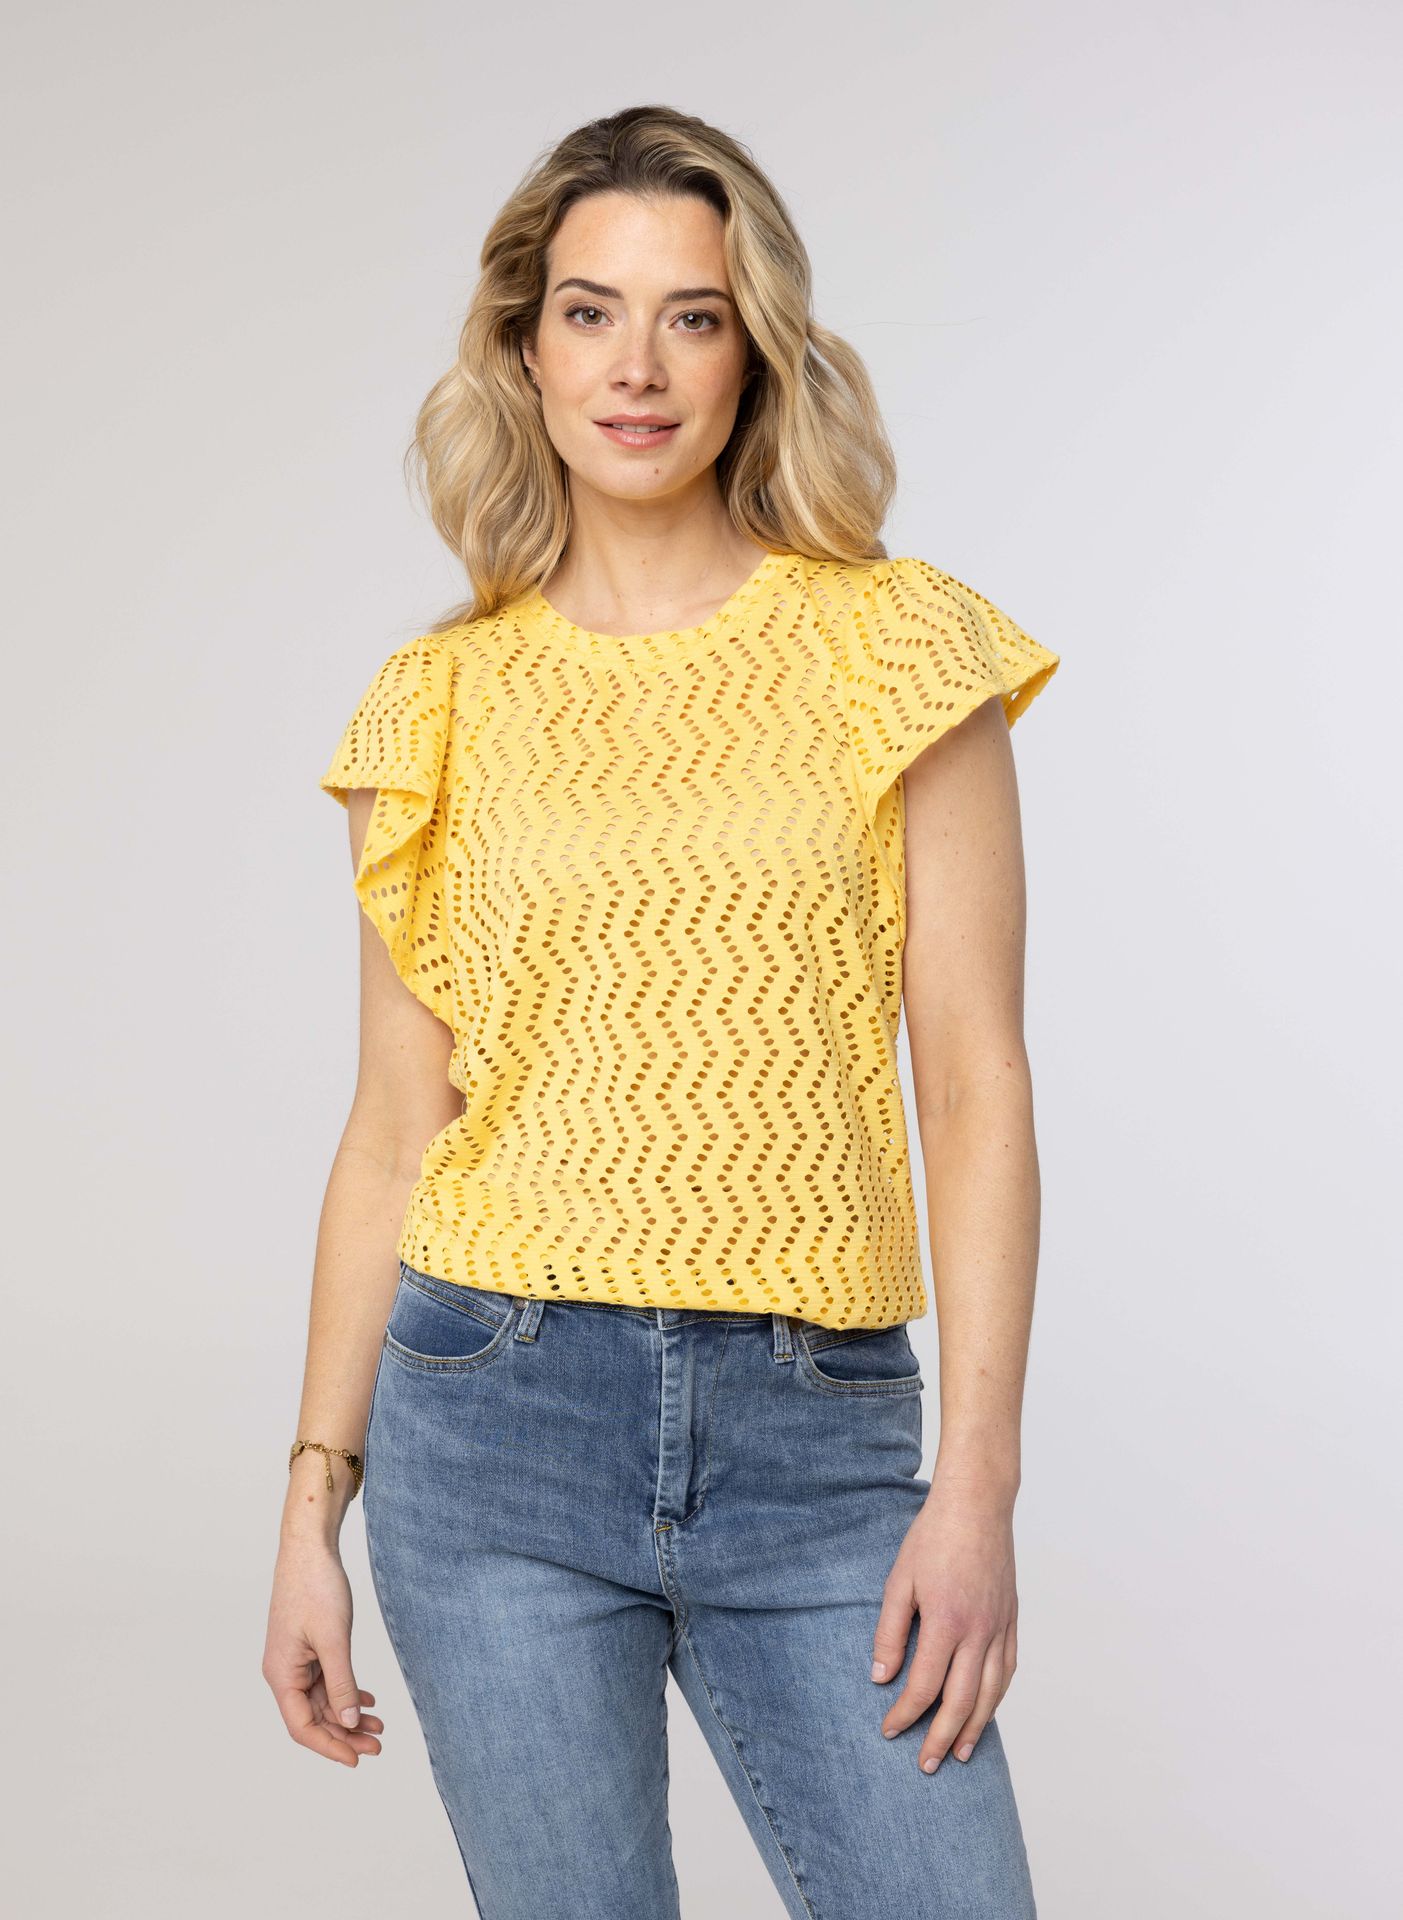 Norah Geel shirt yellow 213960-300